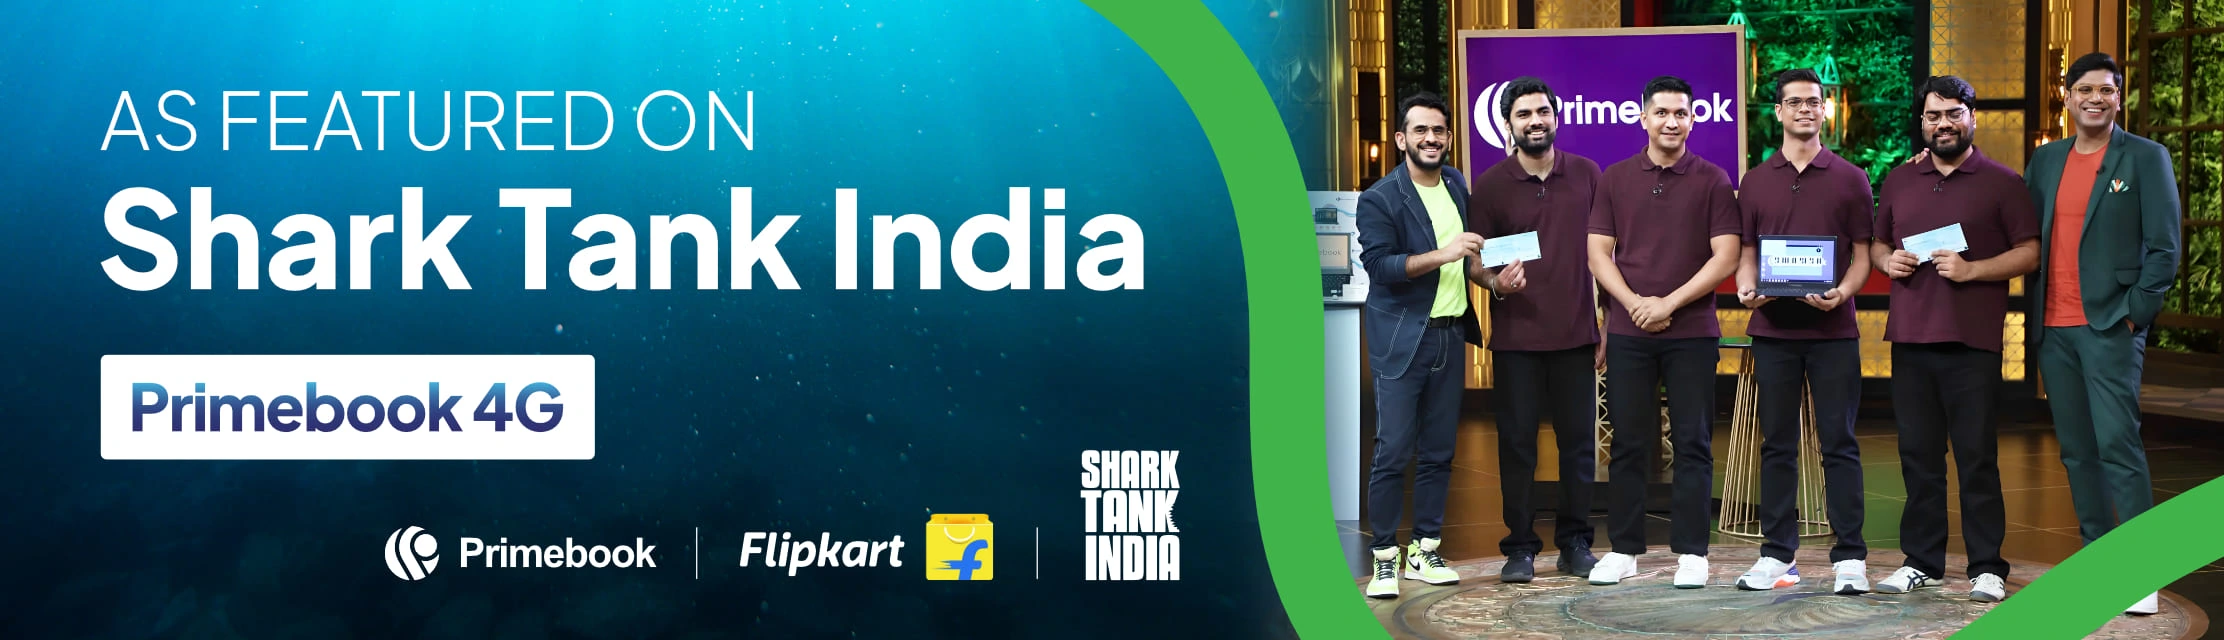 Full team of primebook 4G shark tank along with aman gupta and peeyush bansal showing as featured on shark tank India